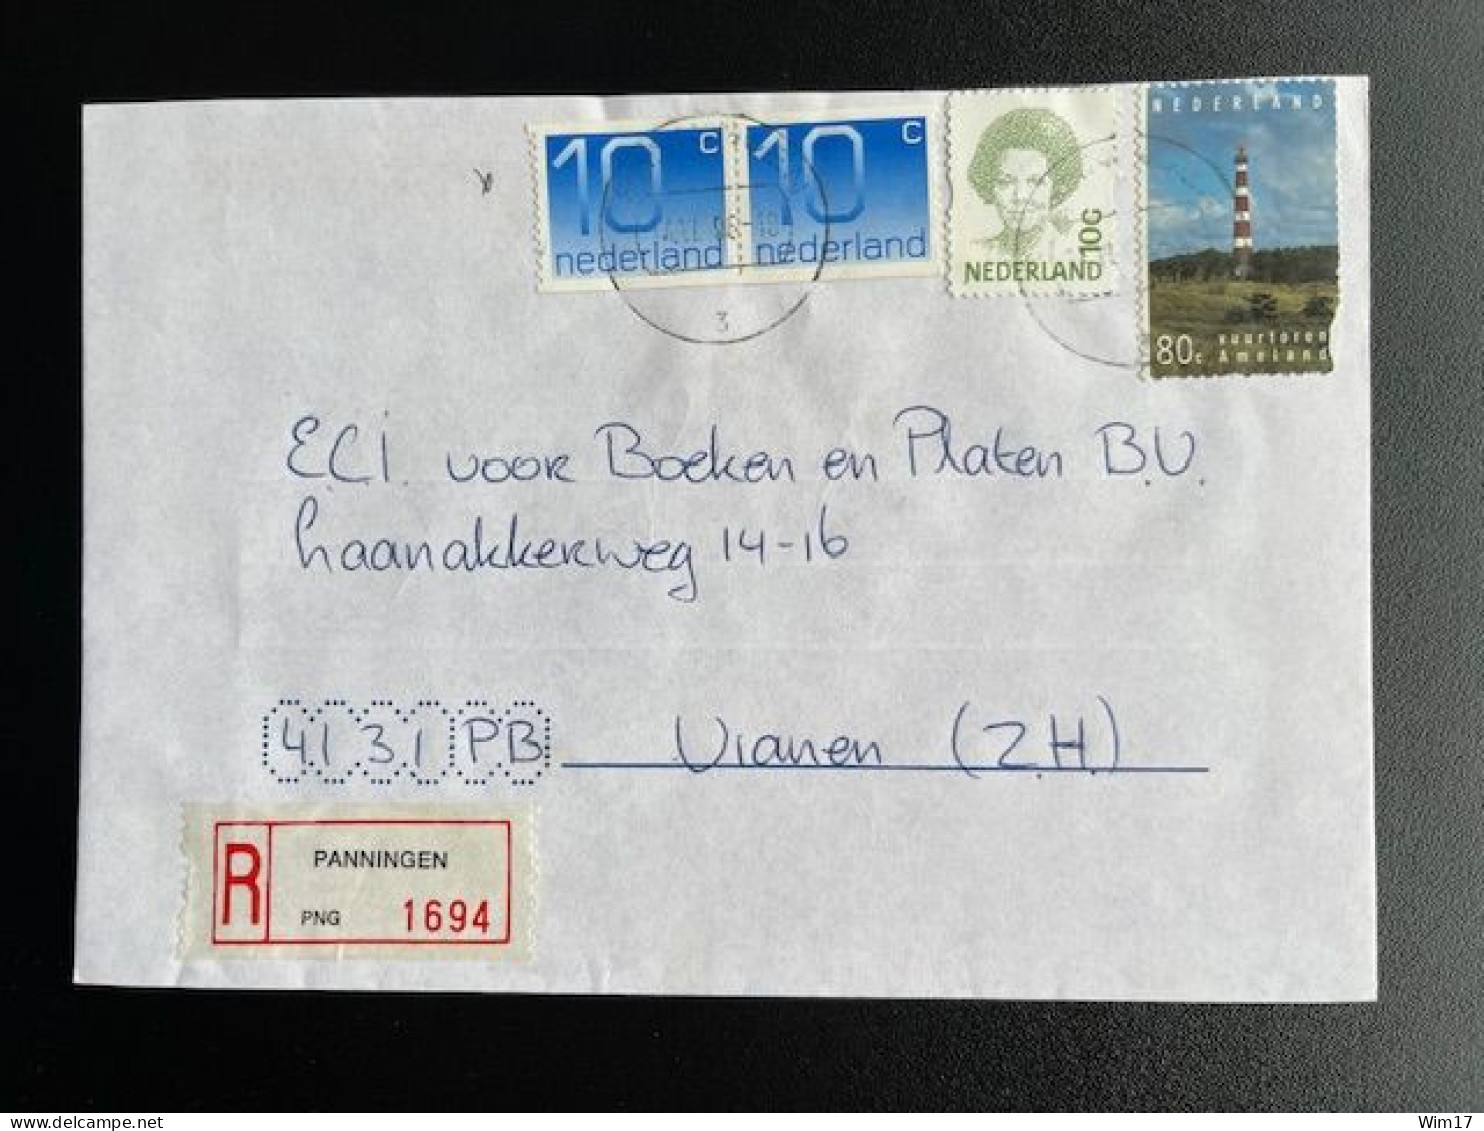 NETHERLANDS 1996 REGISTERED LETTER PANNINGEN TO VIANEN 14-06-1996 NEDERLAND AANGETEKEND - Lettres & Documents